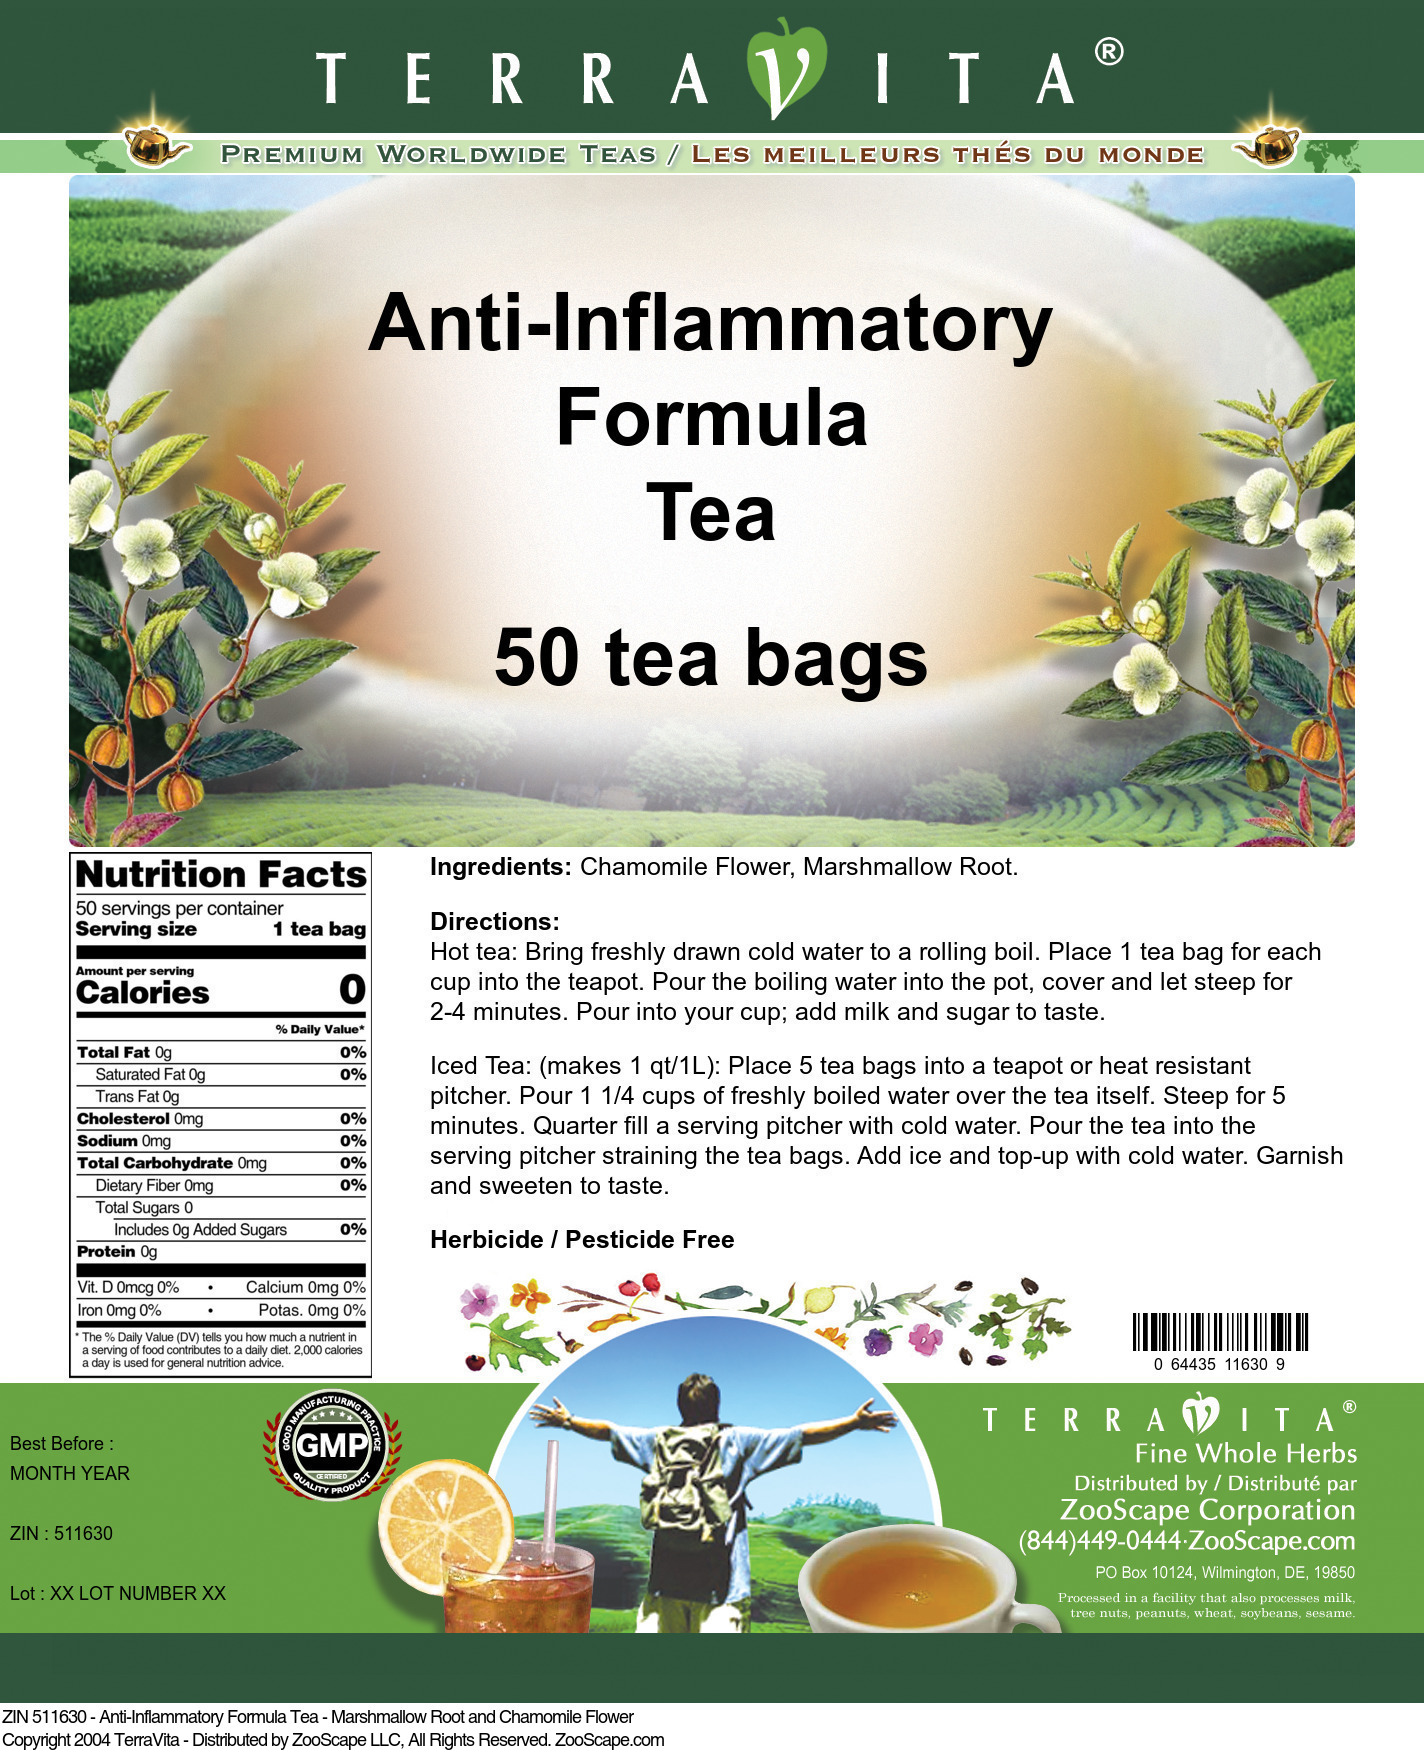 Anti-Inflammatory Formula Tea - Marshmallow Root and Chamomile Flower - Label